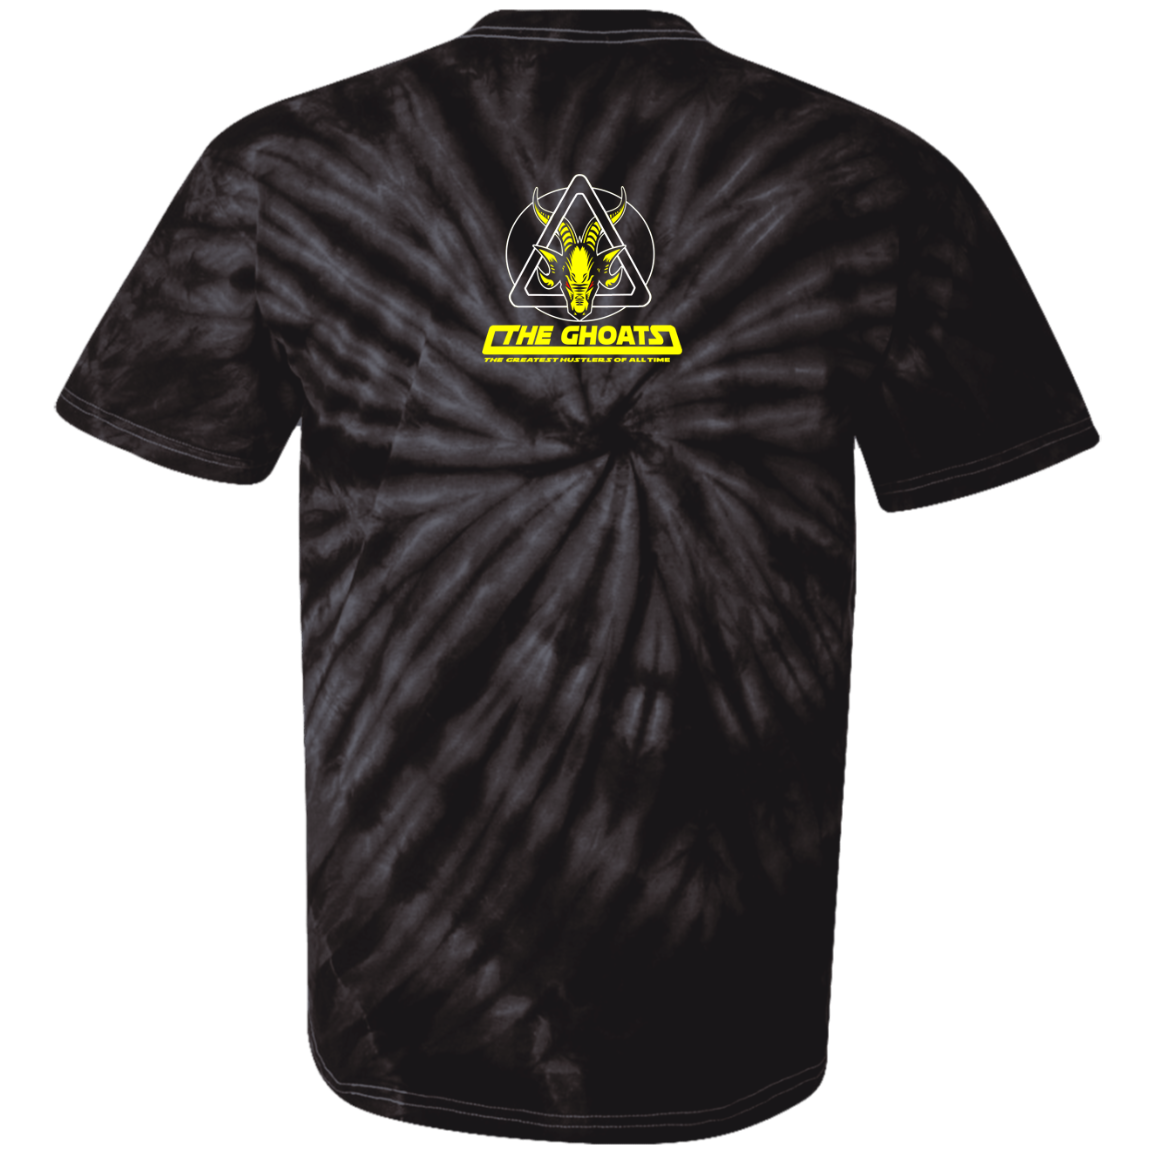 The GHOATS Custom Design. # 39 The Dark Side of Hustling. Youth Tie Dye T-Shirt